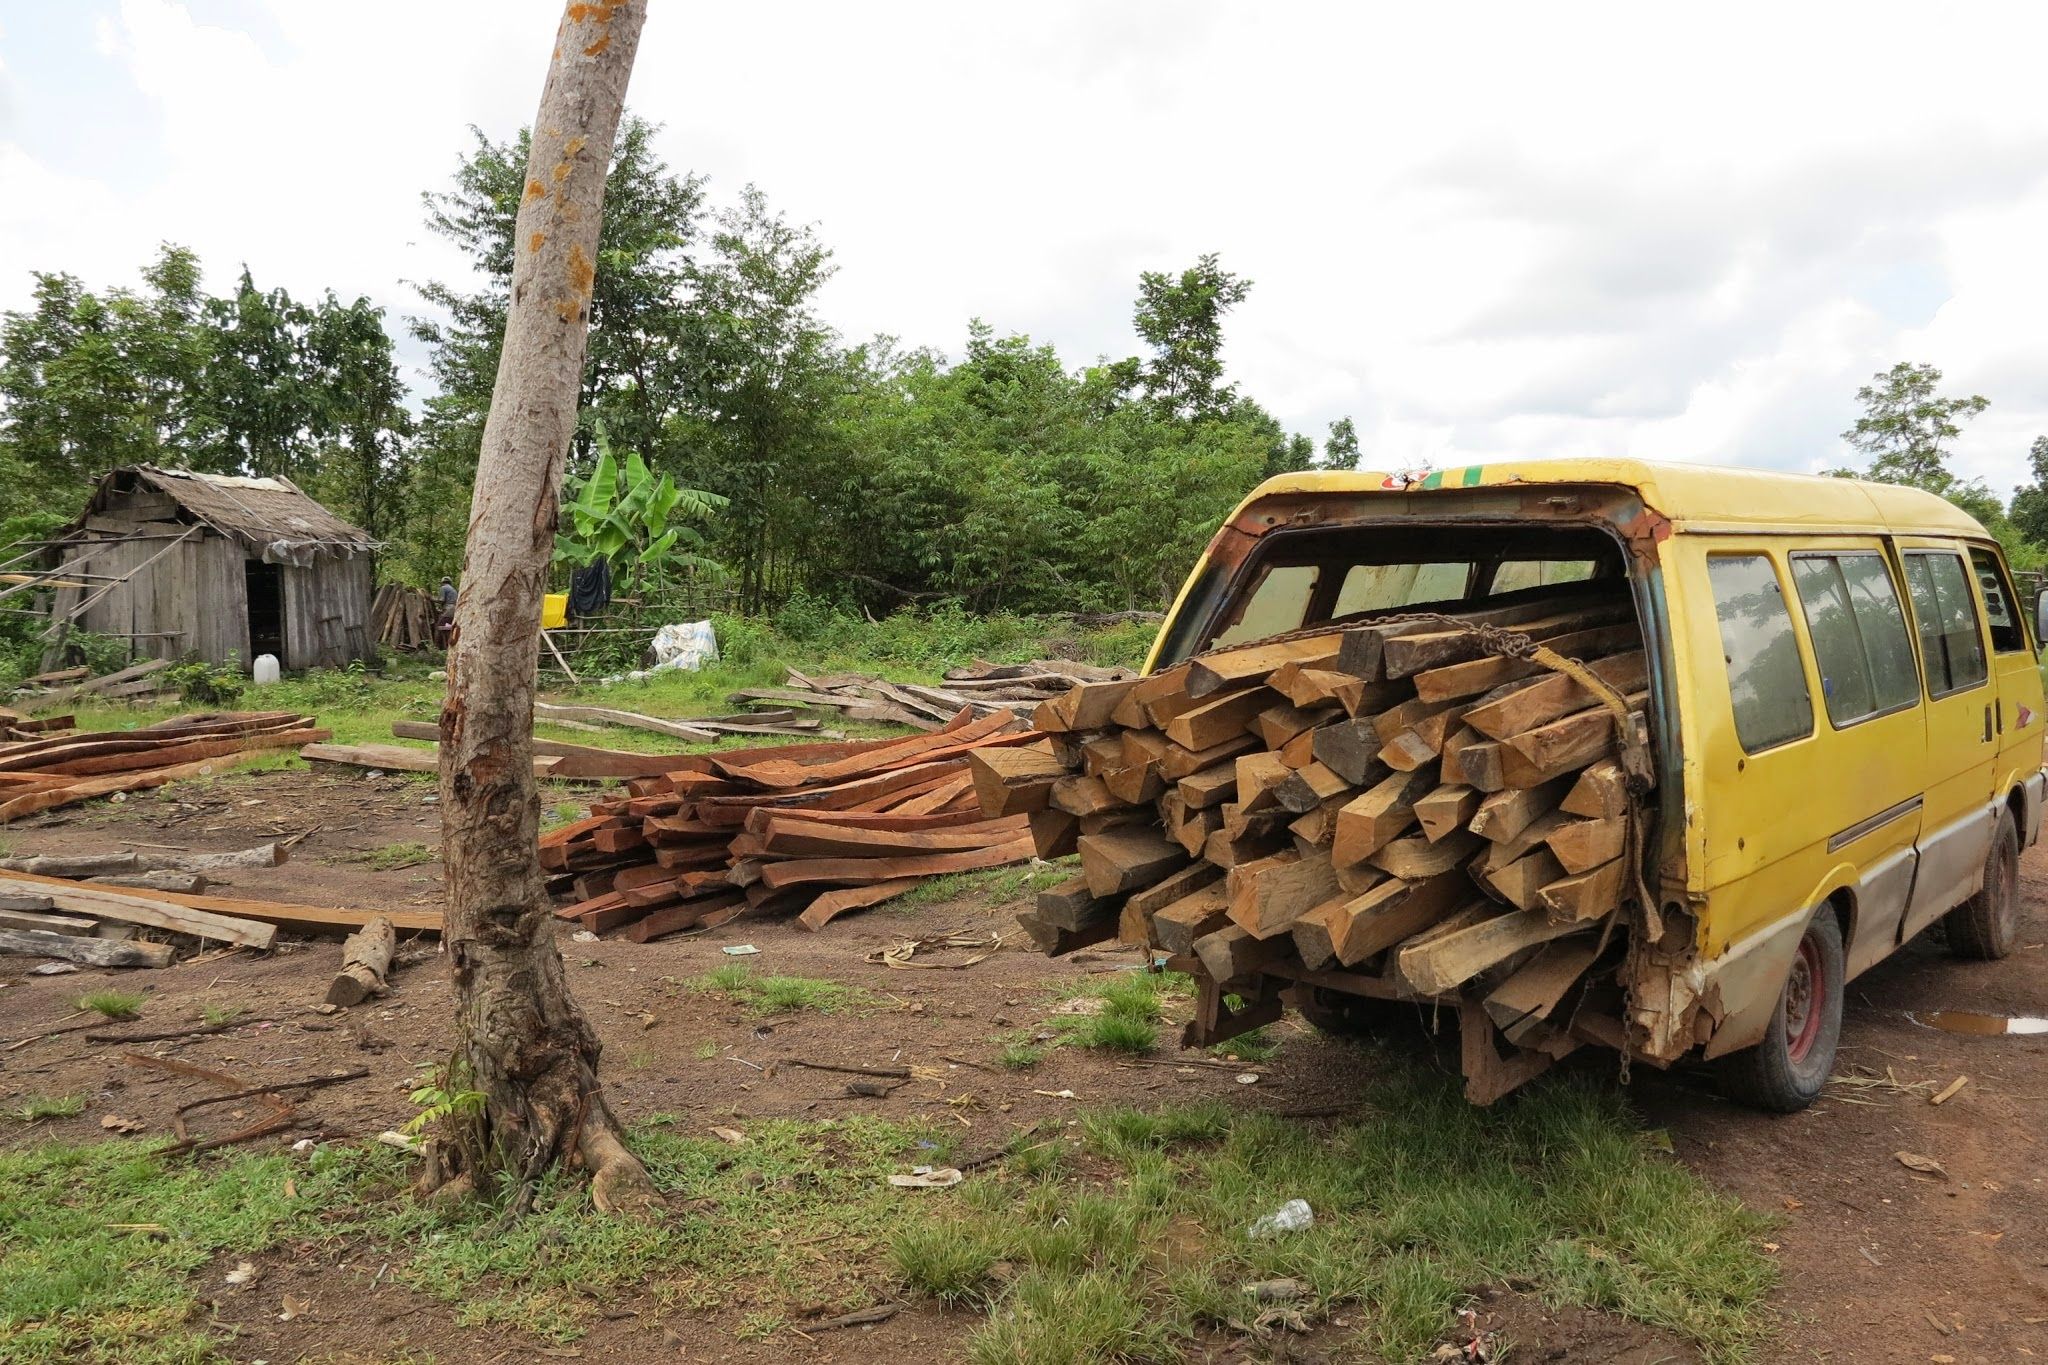 A shipment of illegal logs awaits transport